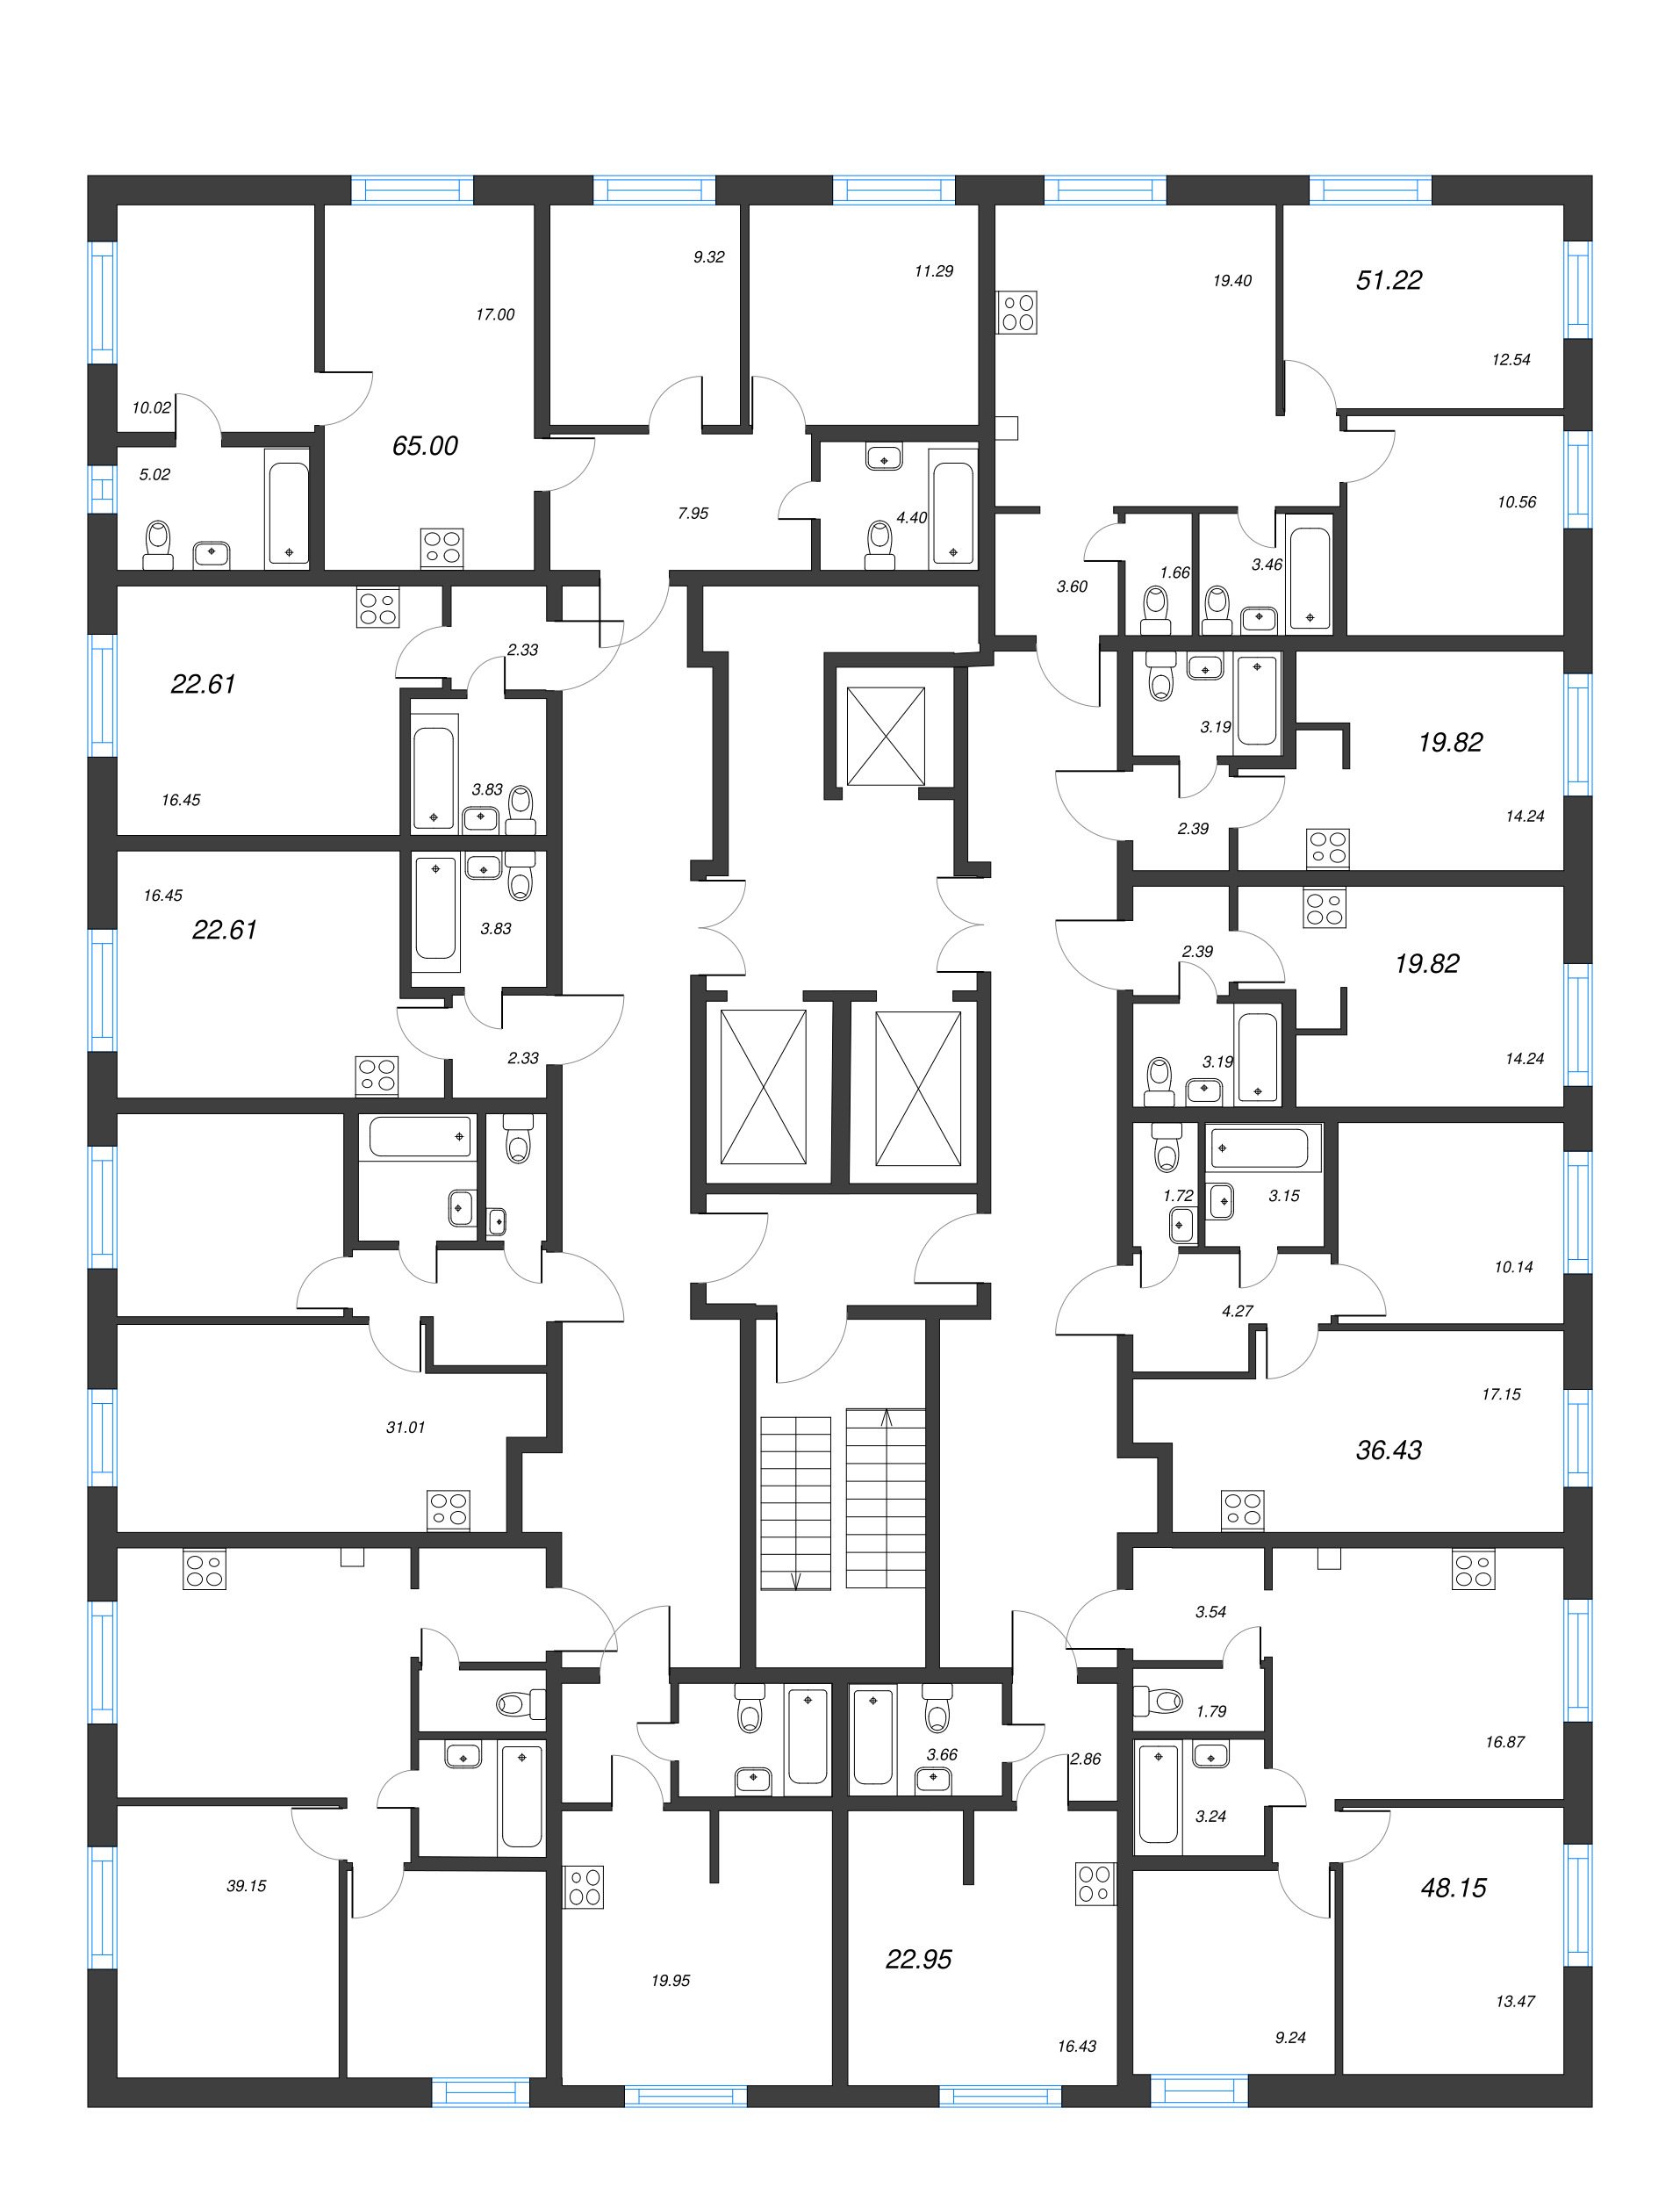 2-комнатная (Евро) квартира, 36.43 м² - планировка этажа